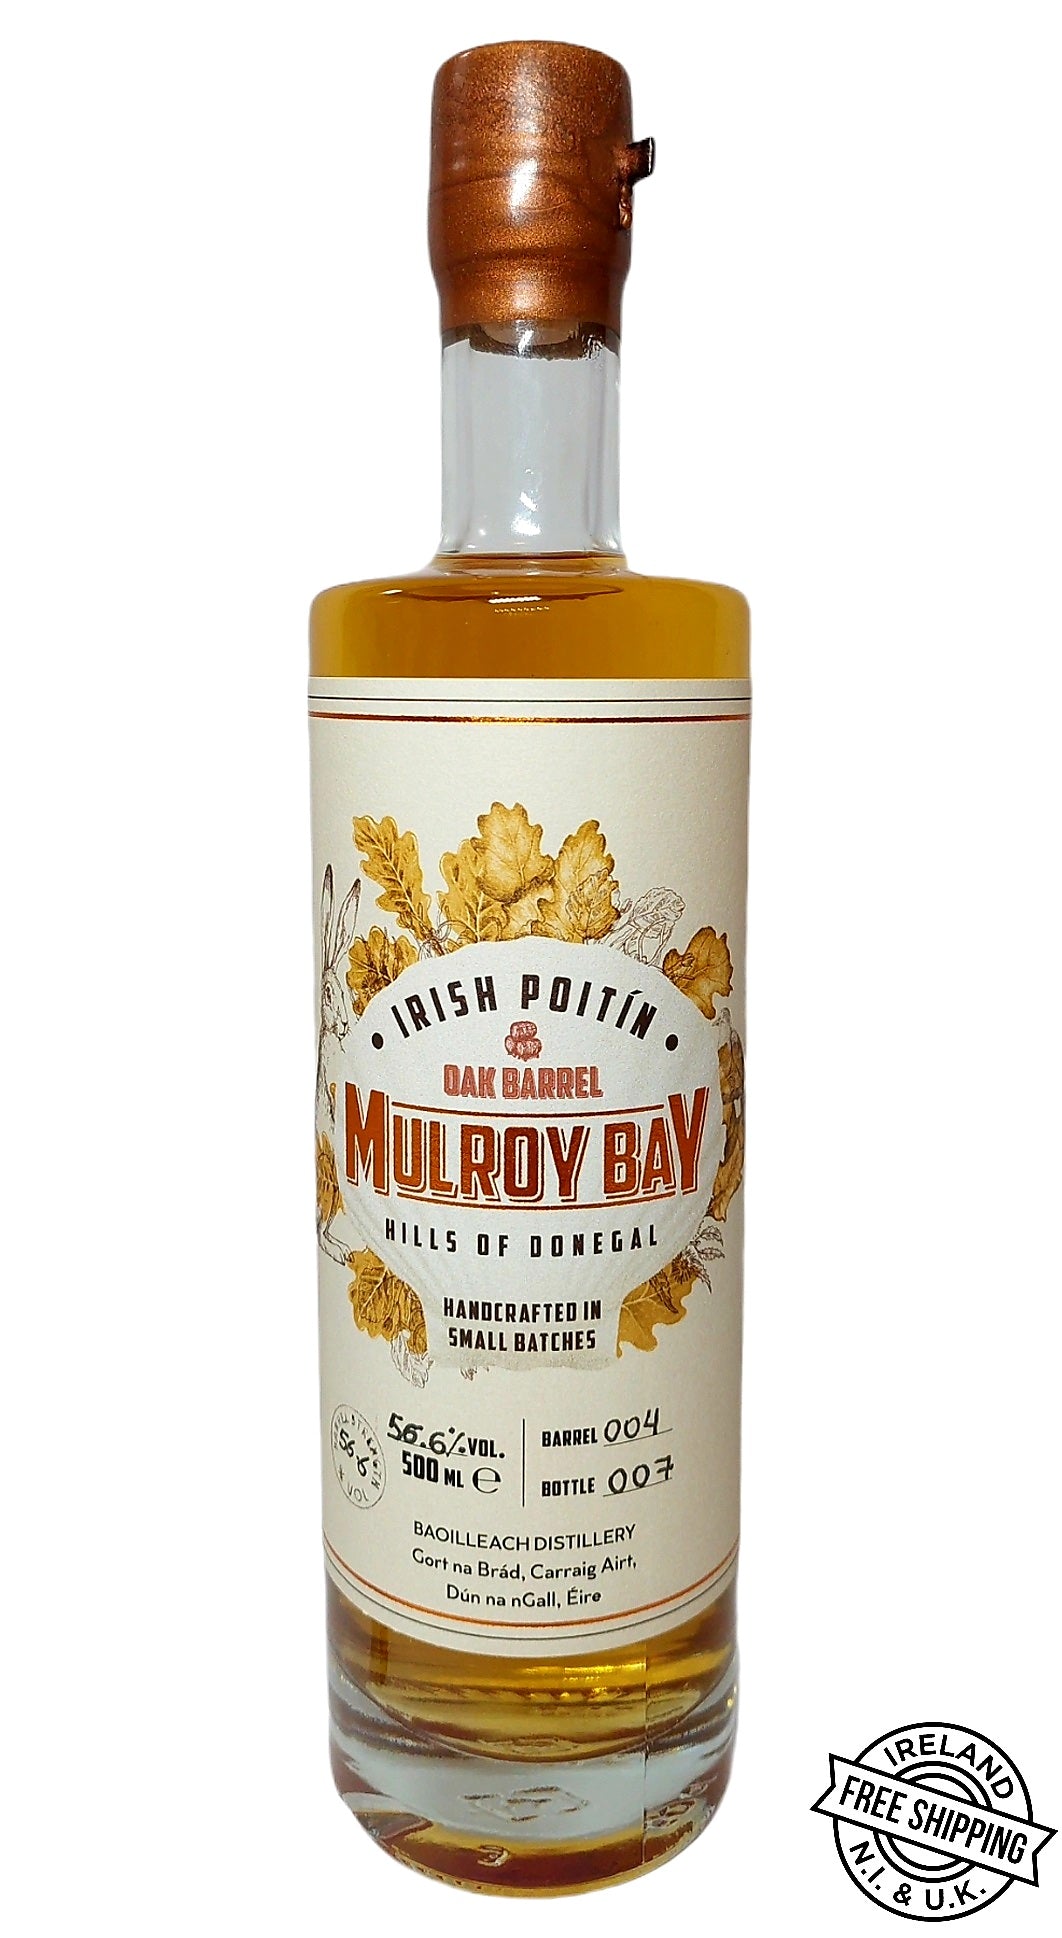 Mulroy Bay - Irish Poitín 56.6% - Oak Barrel Rested 500ml